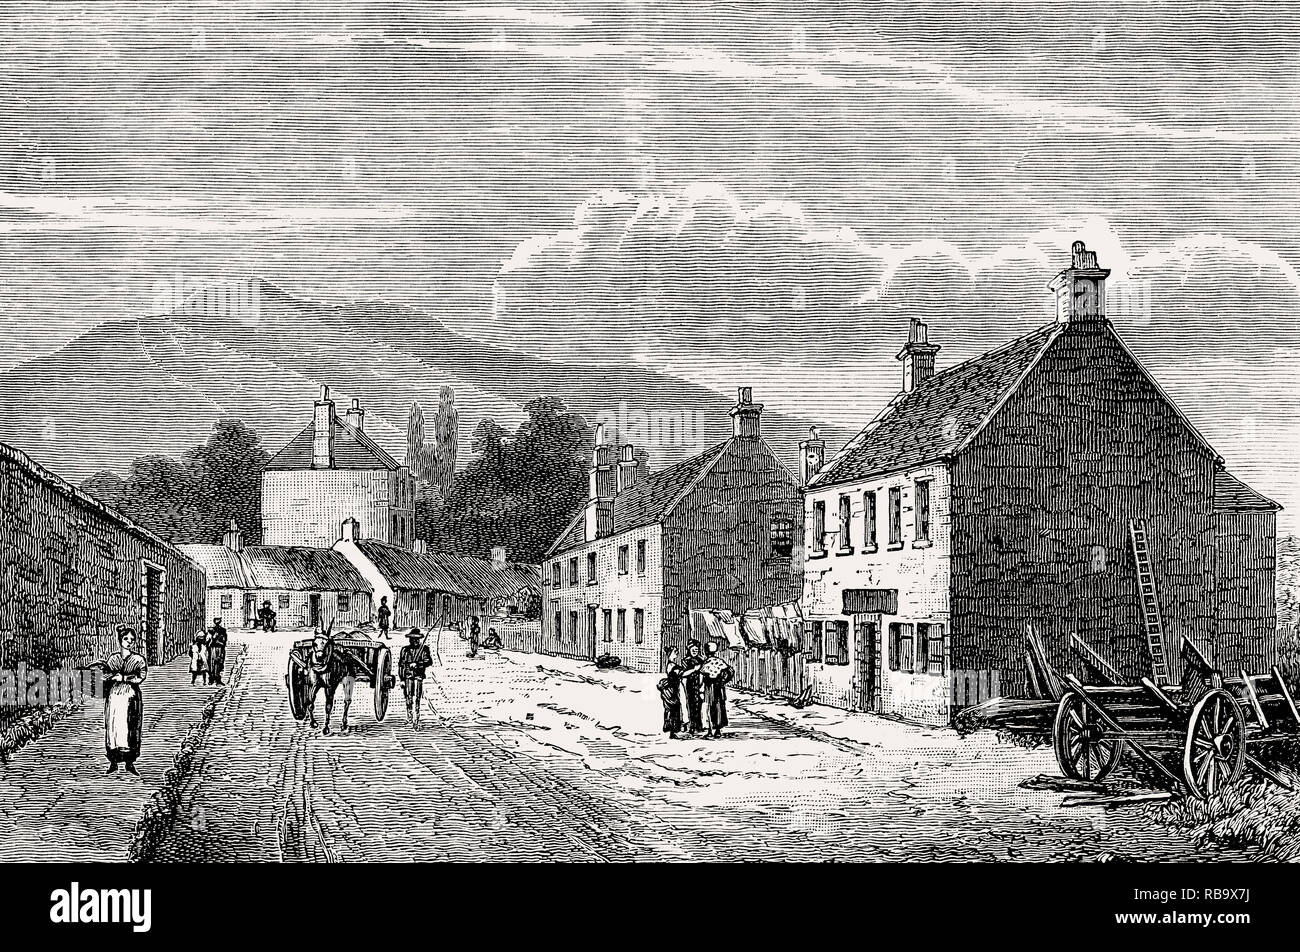 Bonnie Prince Charlie House, Duddingston Village, Edinburgh, Scotland, 19th century Stock Photo